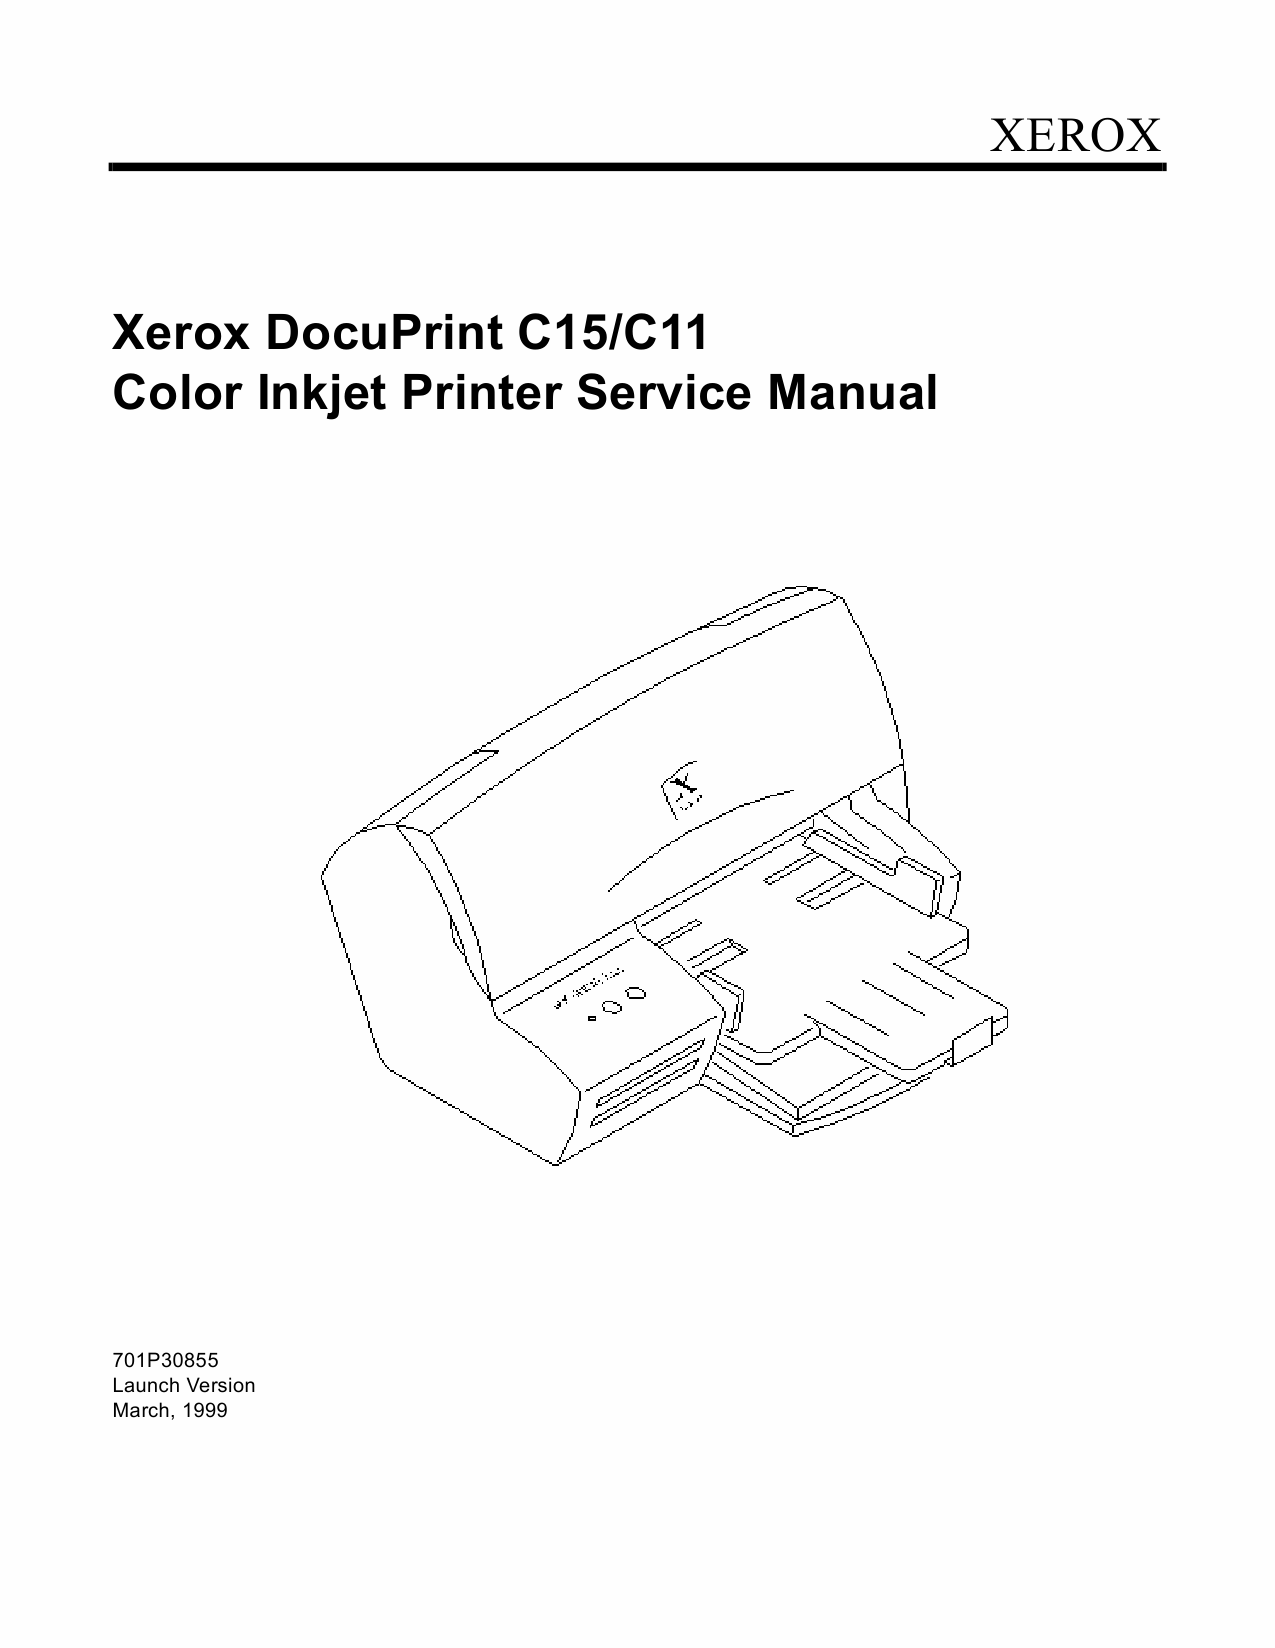 Xerox DocuPrint C11 C15 Parts List and Service Manual-1